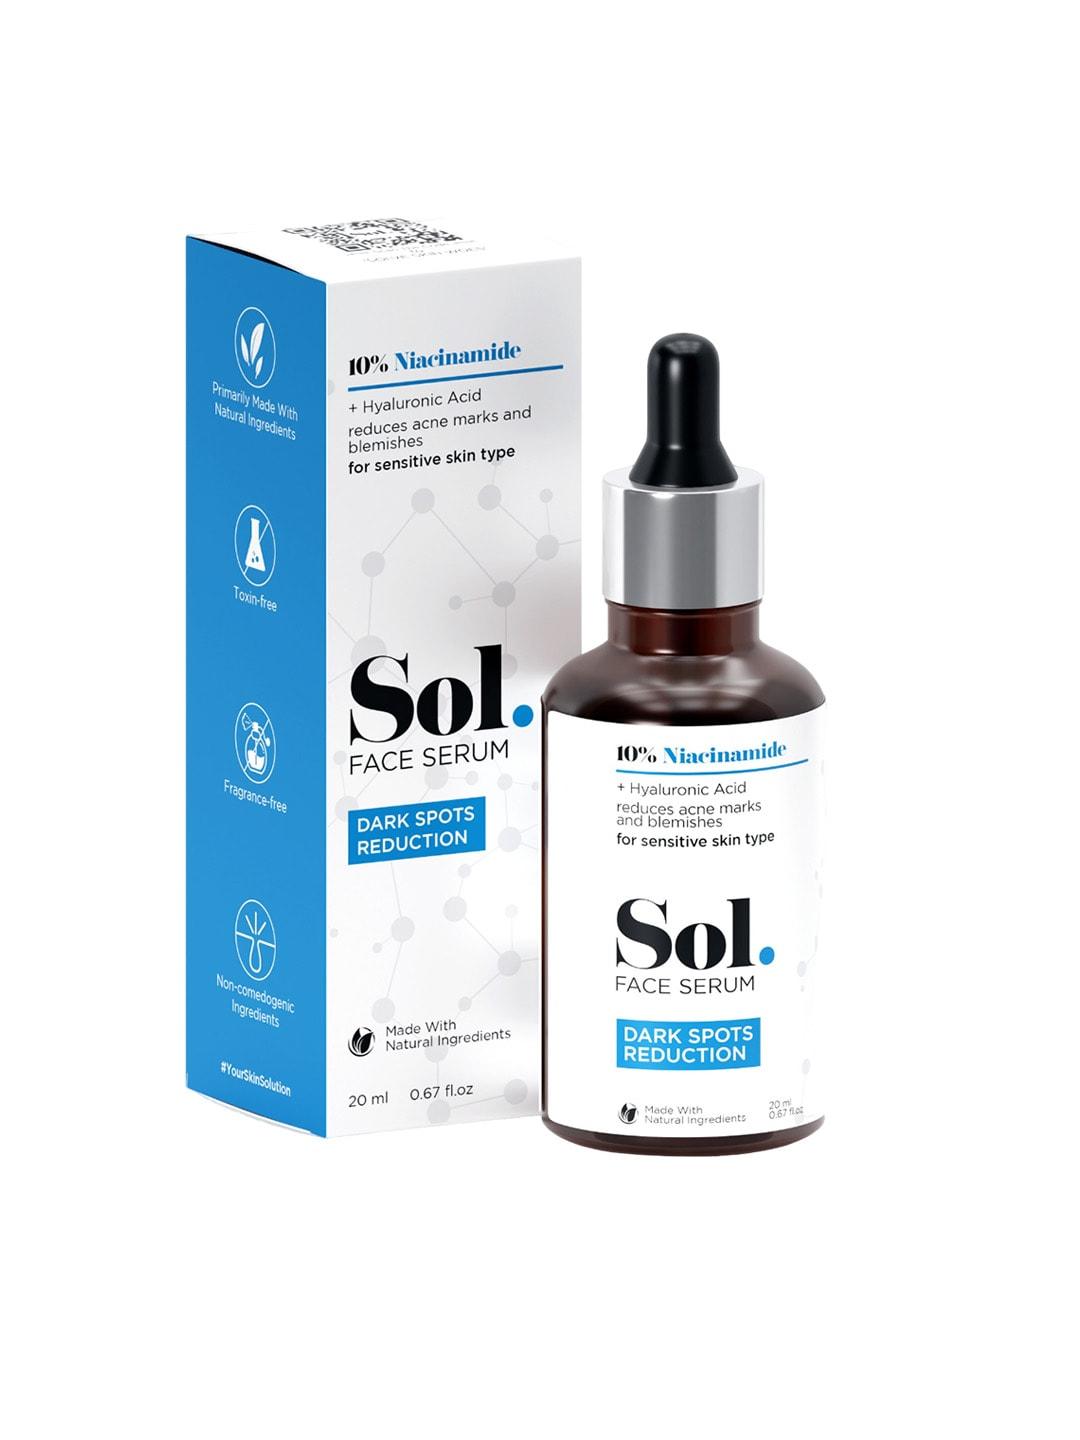 Sol. 10% Niacinamide Dark Spots Reduction Face Serum - 20ml